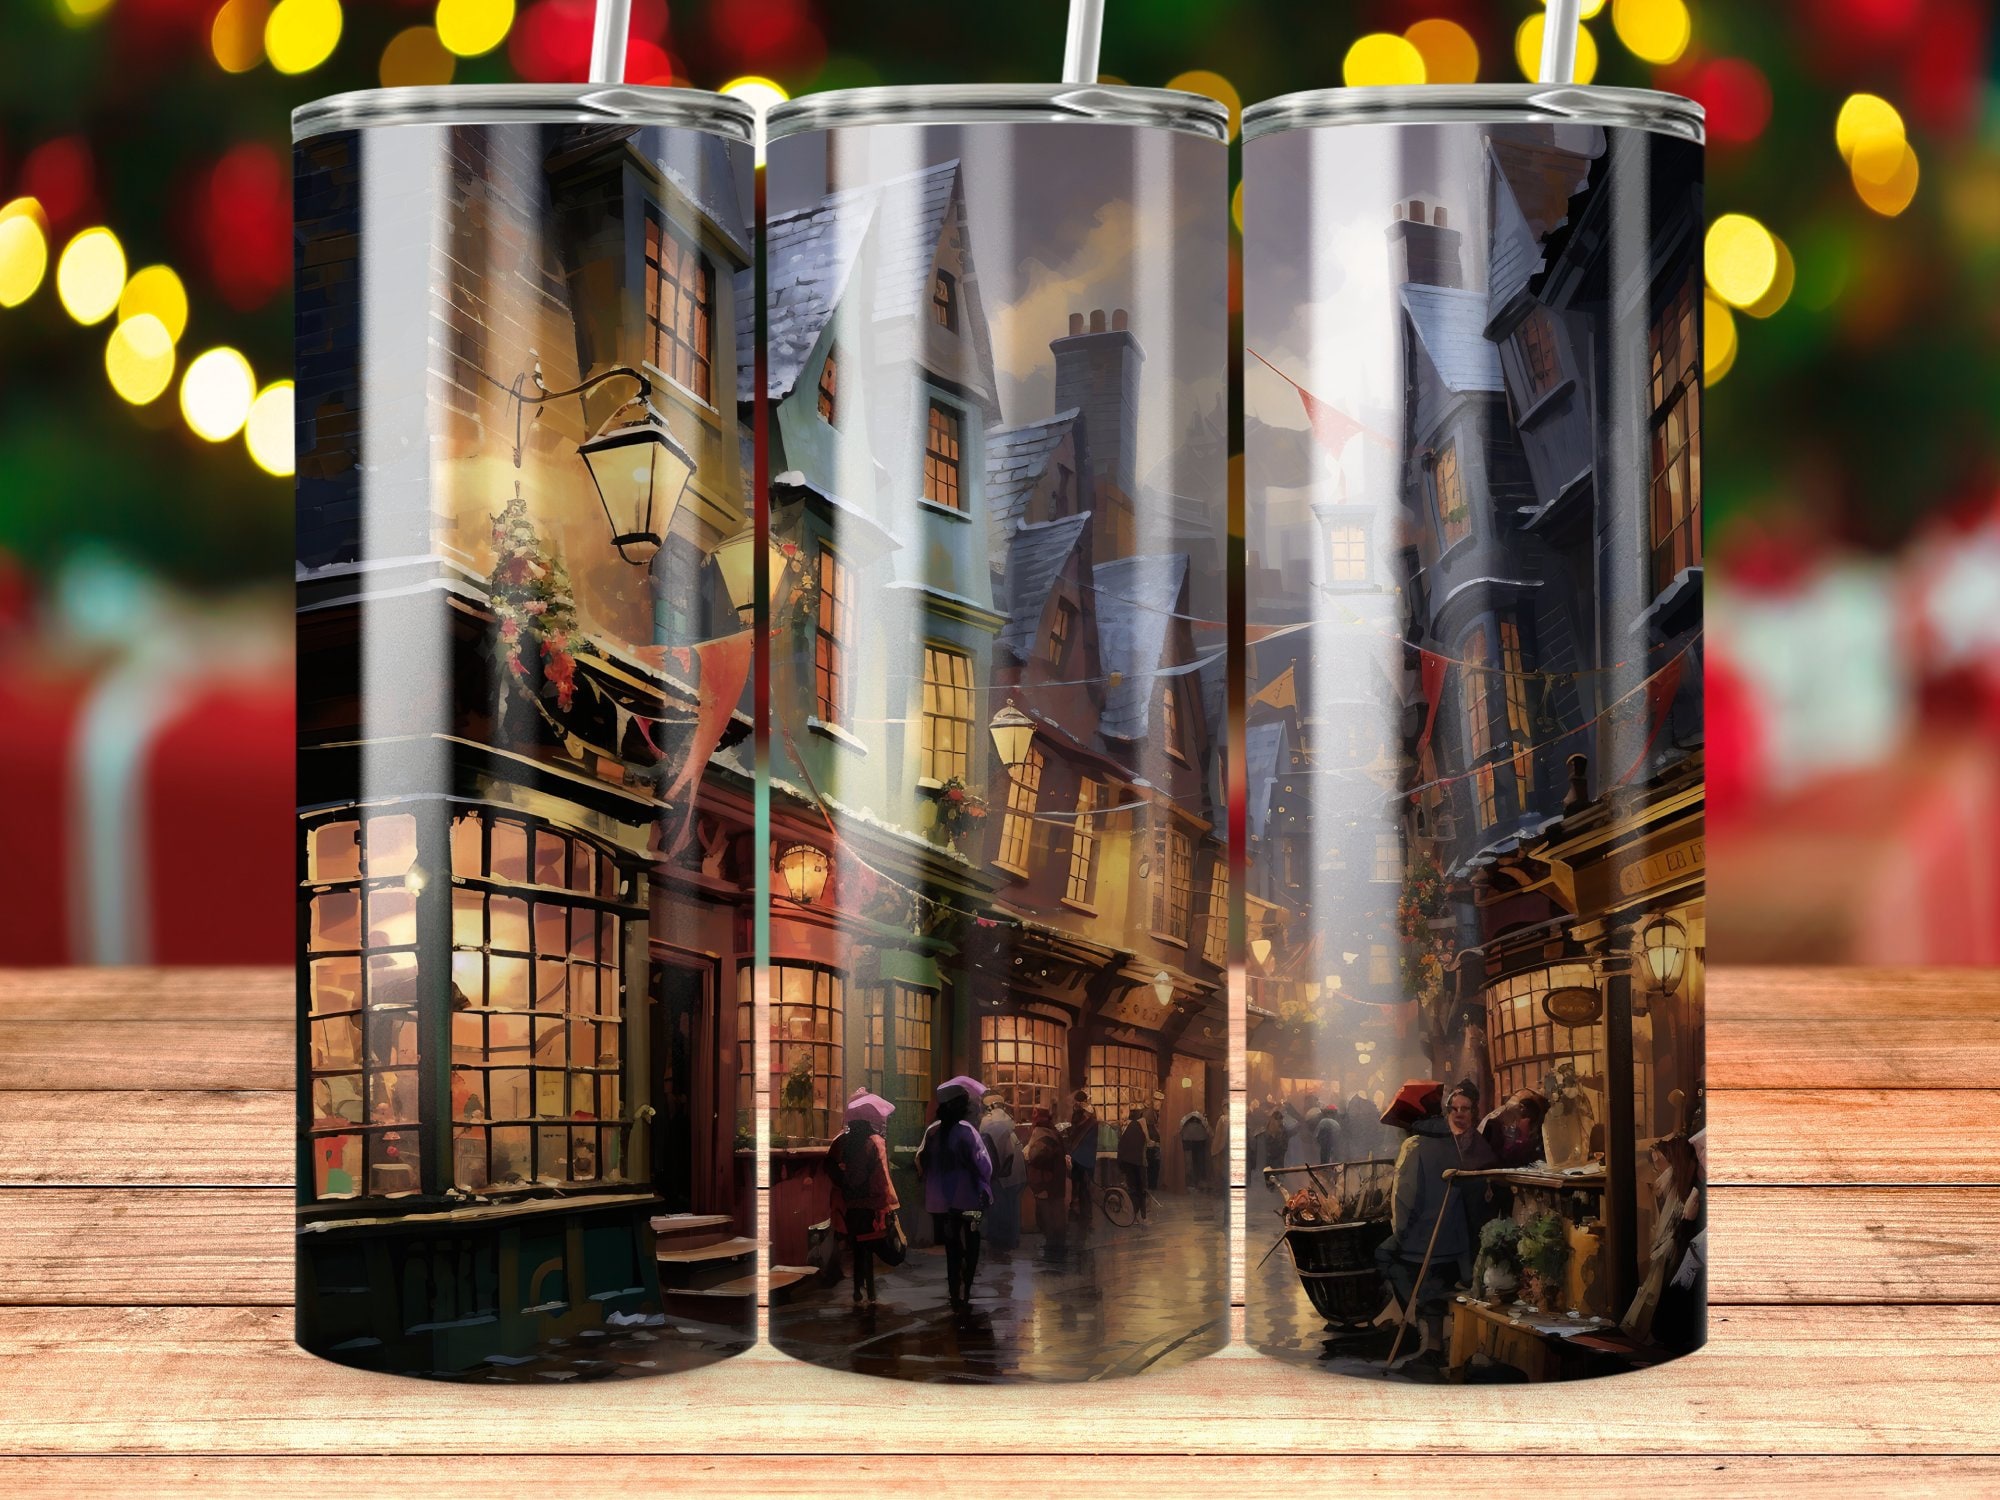 Hogsmeade  Harry Potter Book Nook – MinneMagic